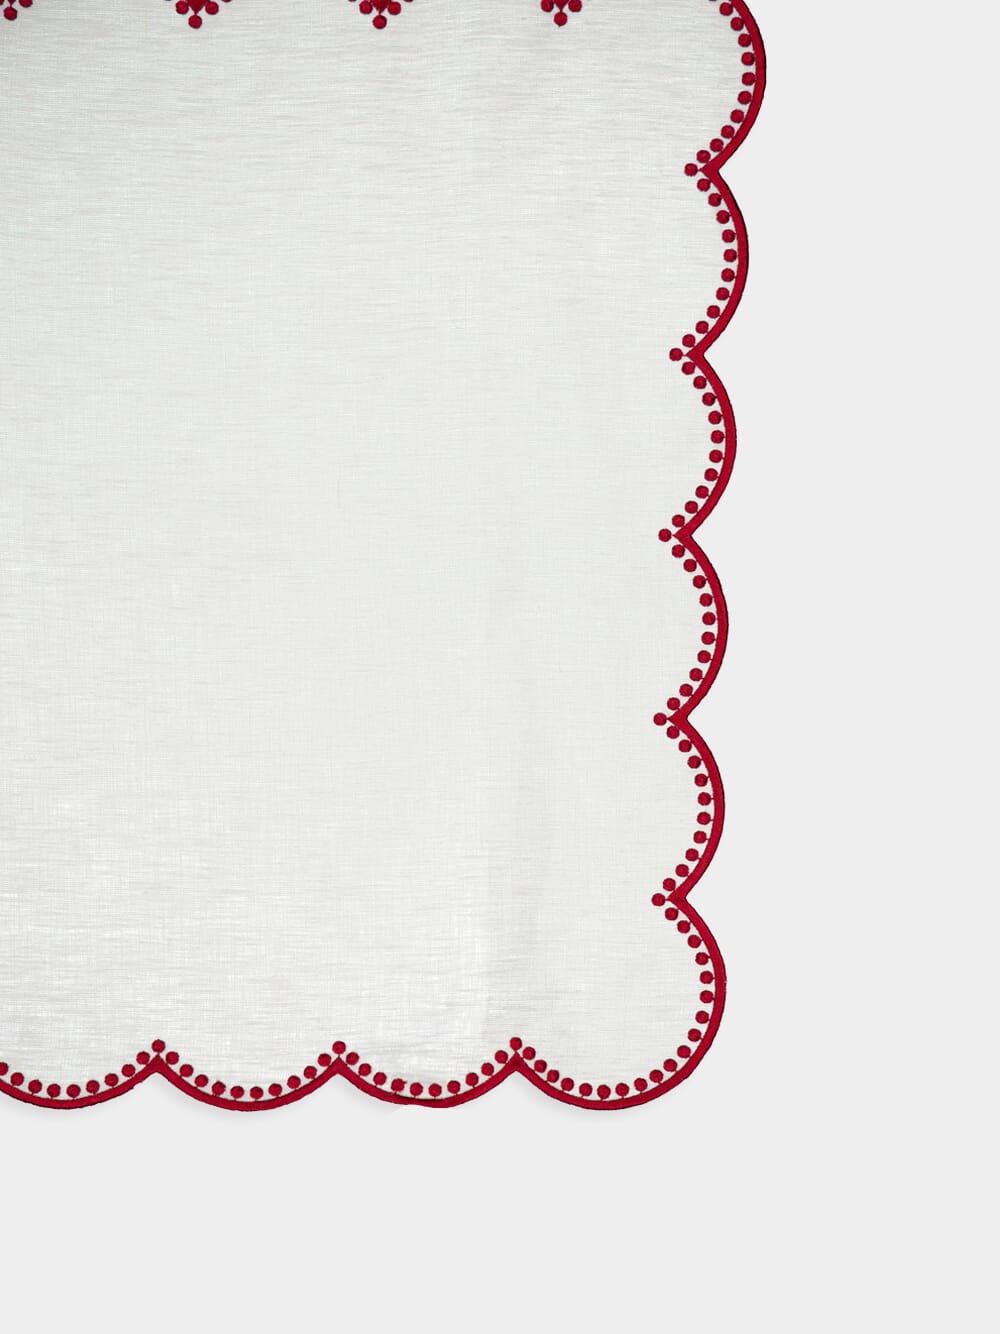 Cascais White Linen Napkin with Red Dots Border